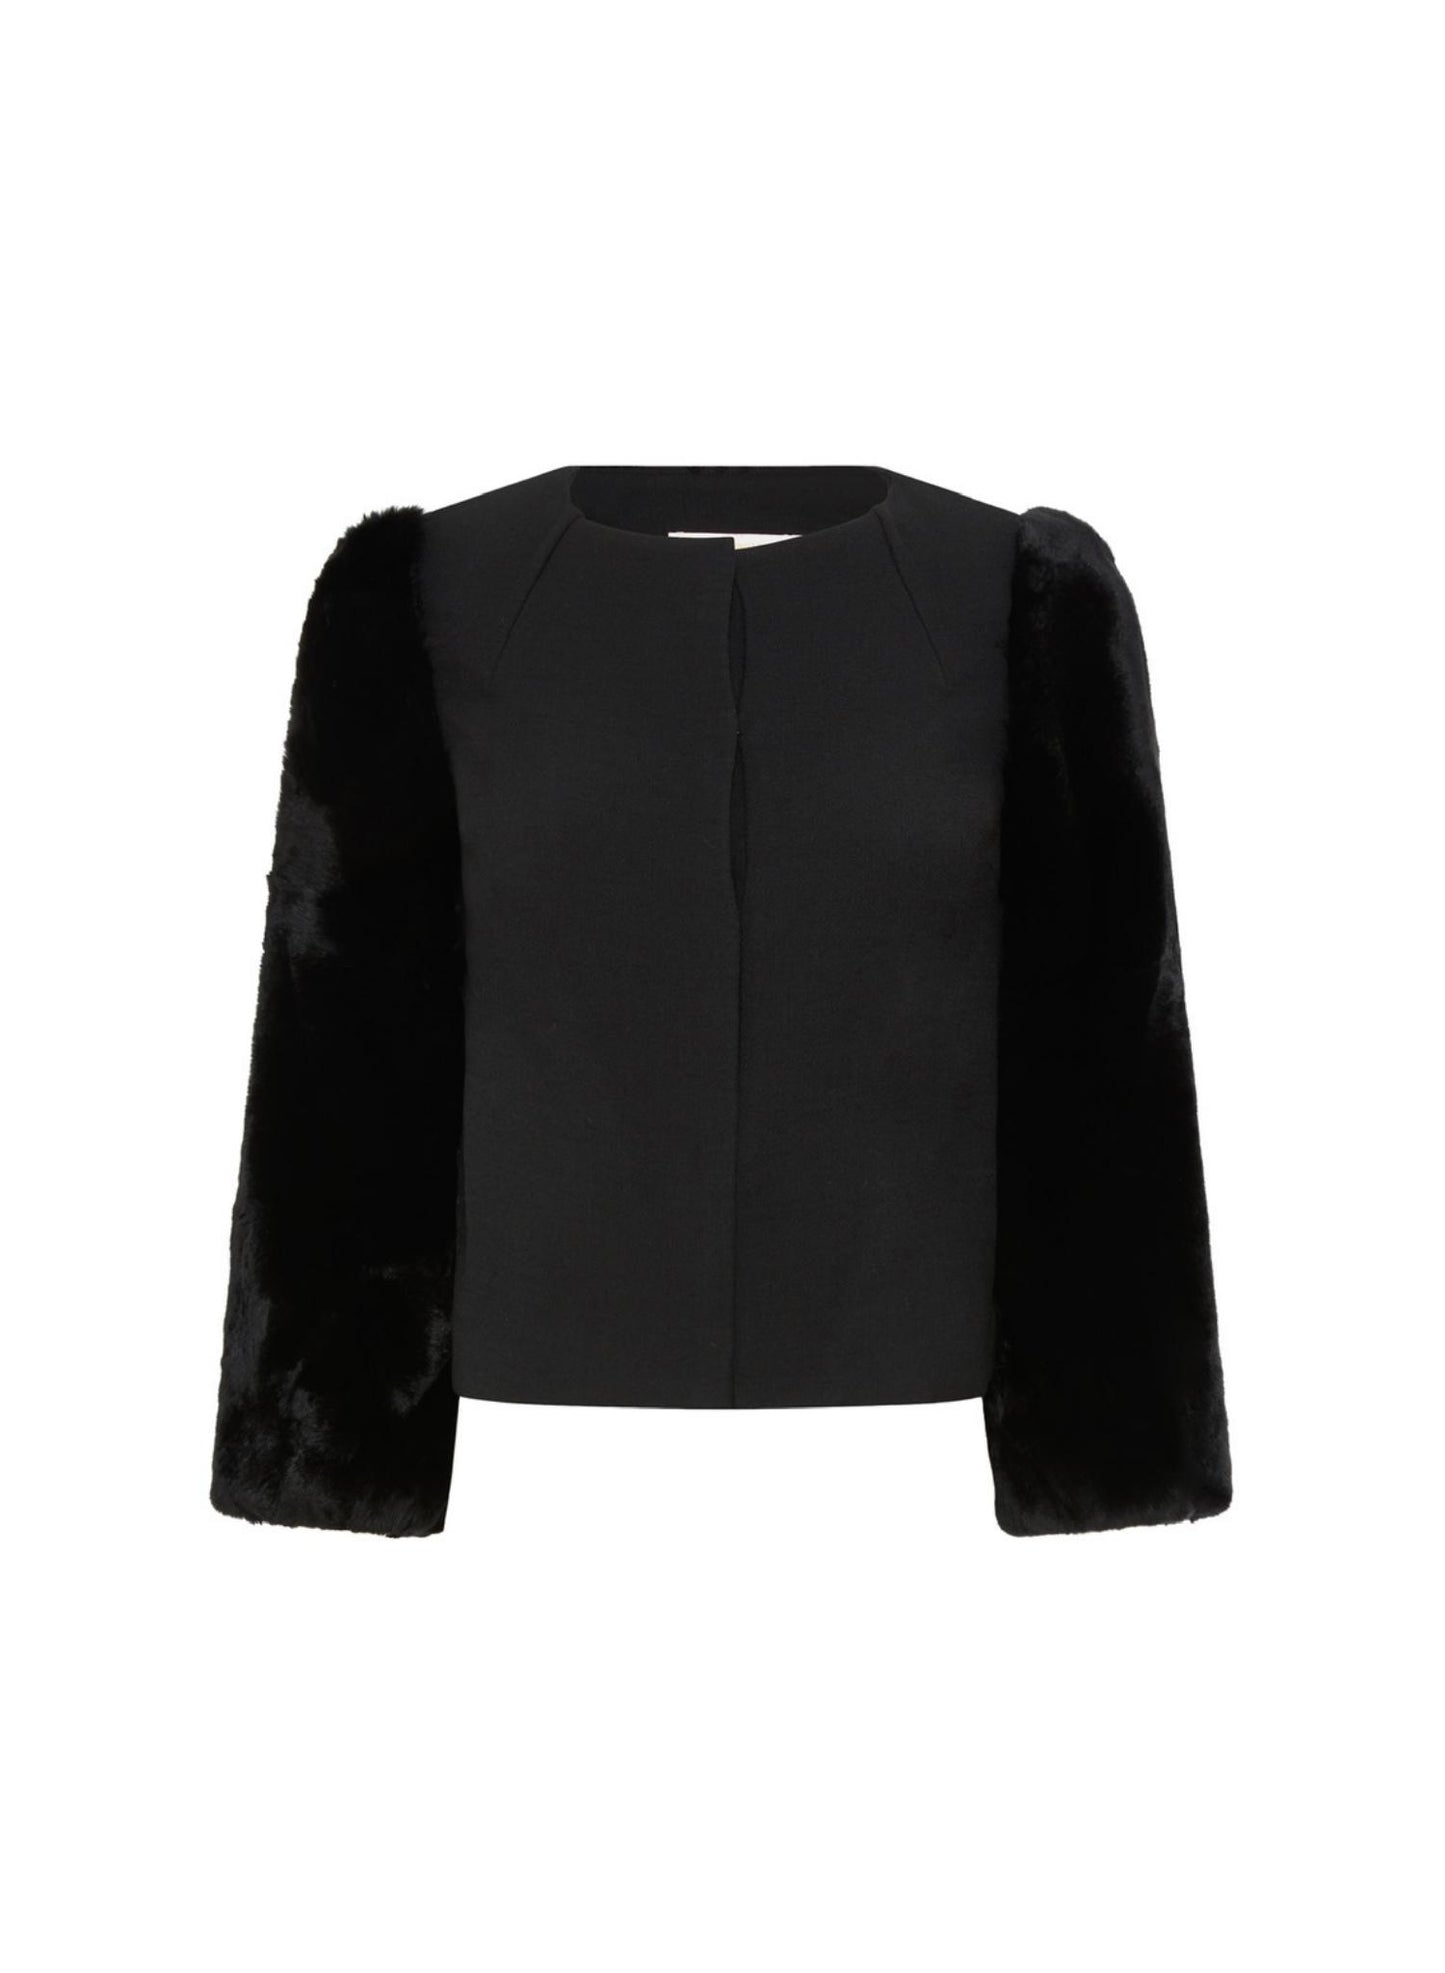 Womens Black Jacket Fur Sleeves Front Closure